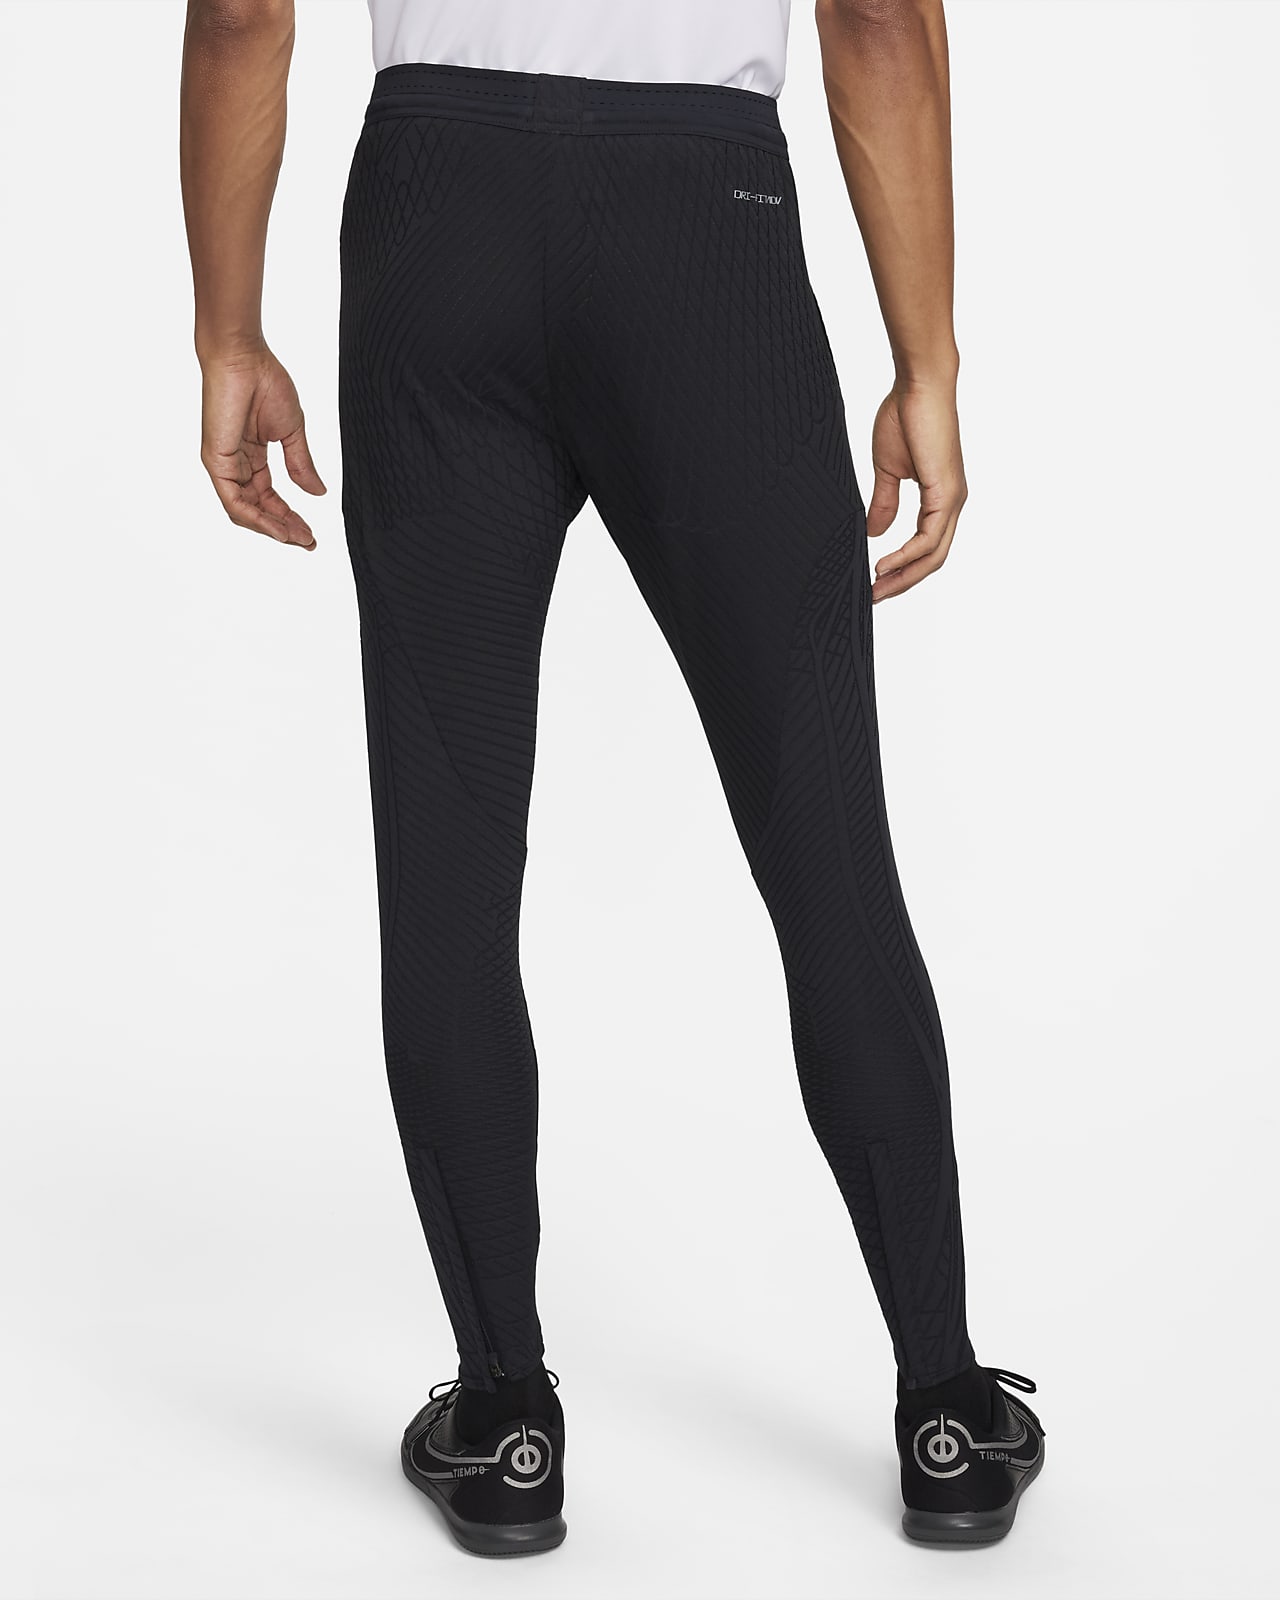 Nike Men's Team Dri-Fit Vapor Speed Compression Football Pants